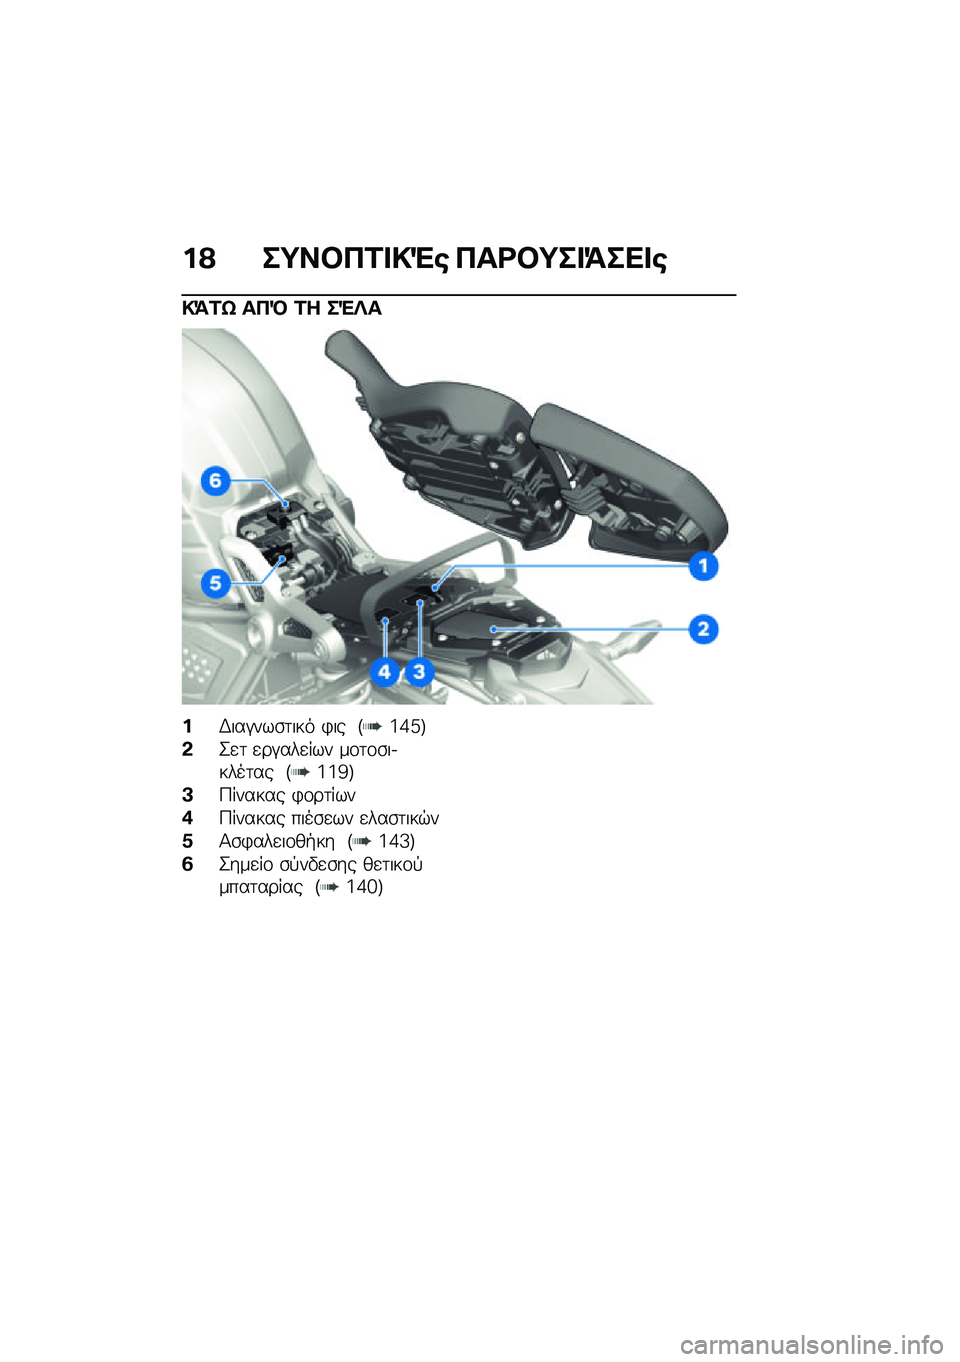 BMW MOTORRAD R NINE T 2021  Εγχειρίδιο ιδιοκτήτη (in Greek) ��? ��;��#��2� �!�"�\b ���<�#�;�� �=��� �\b
�!�=�2�k ���D �2� ��"�R�
��,���#���\b�	��� �)�� �E�c�h�b�F
�&�2�
�	 �
��#���
��� ��\f�	�\f�\b��.����	�� �E�c�c�e�F
�A�9